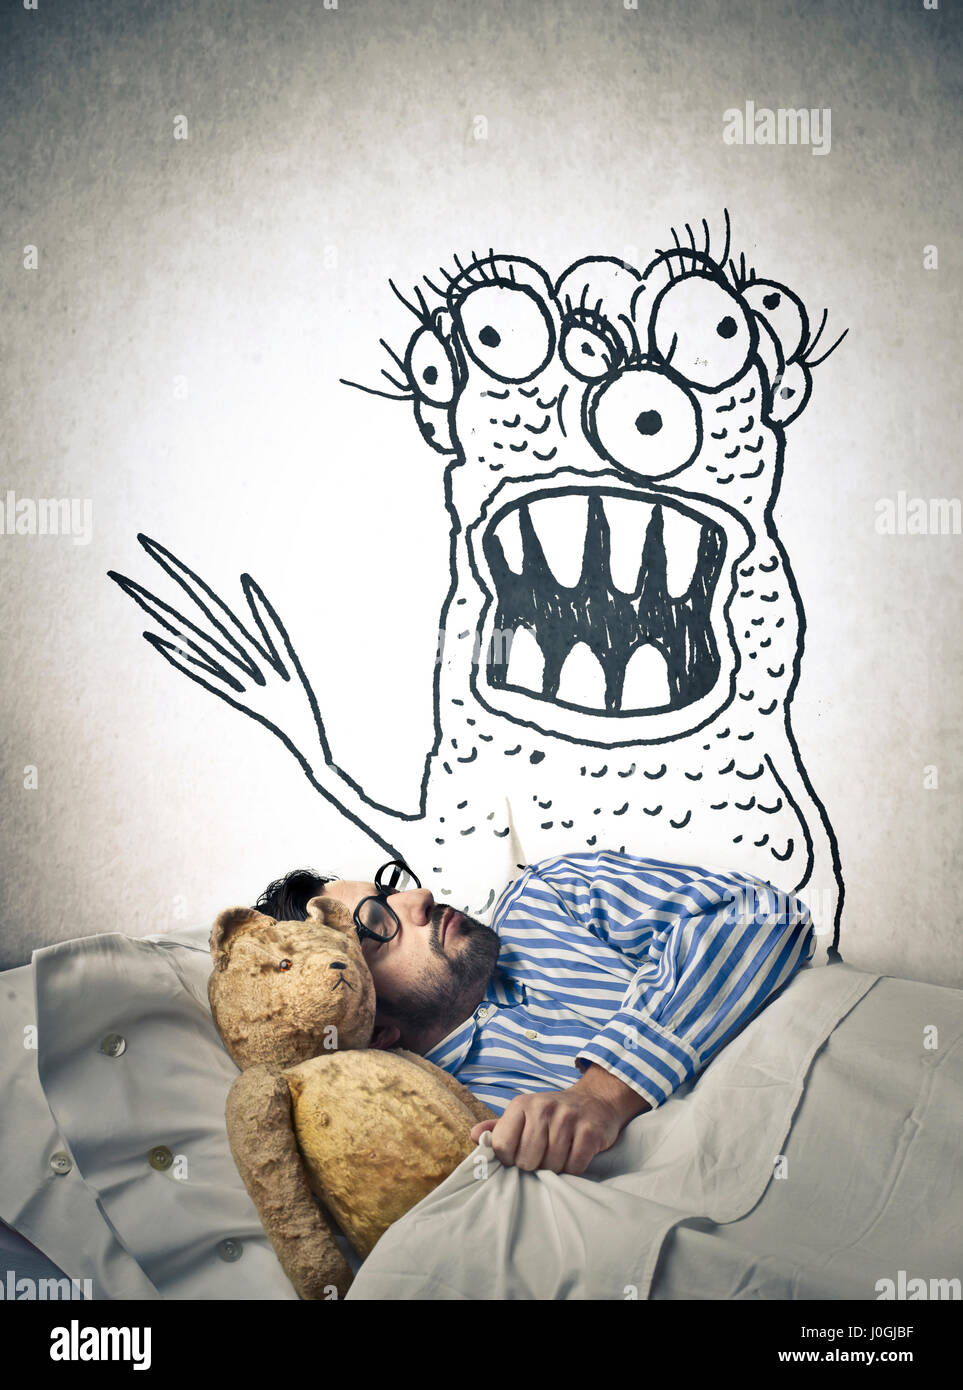 Sleeping man being afraid of drawn monster Stock Photo